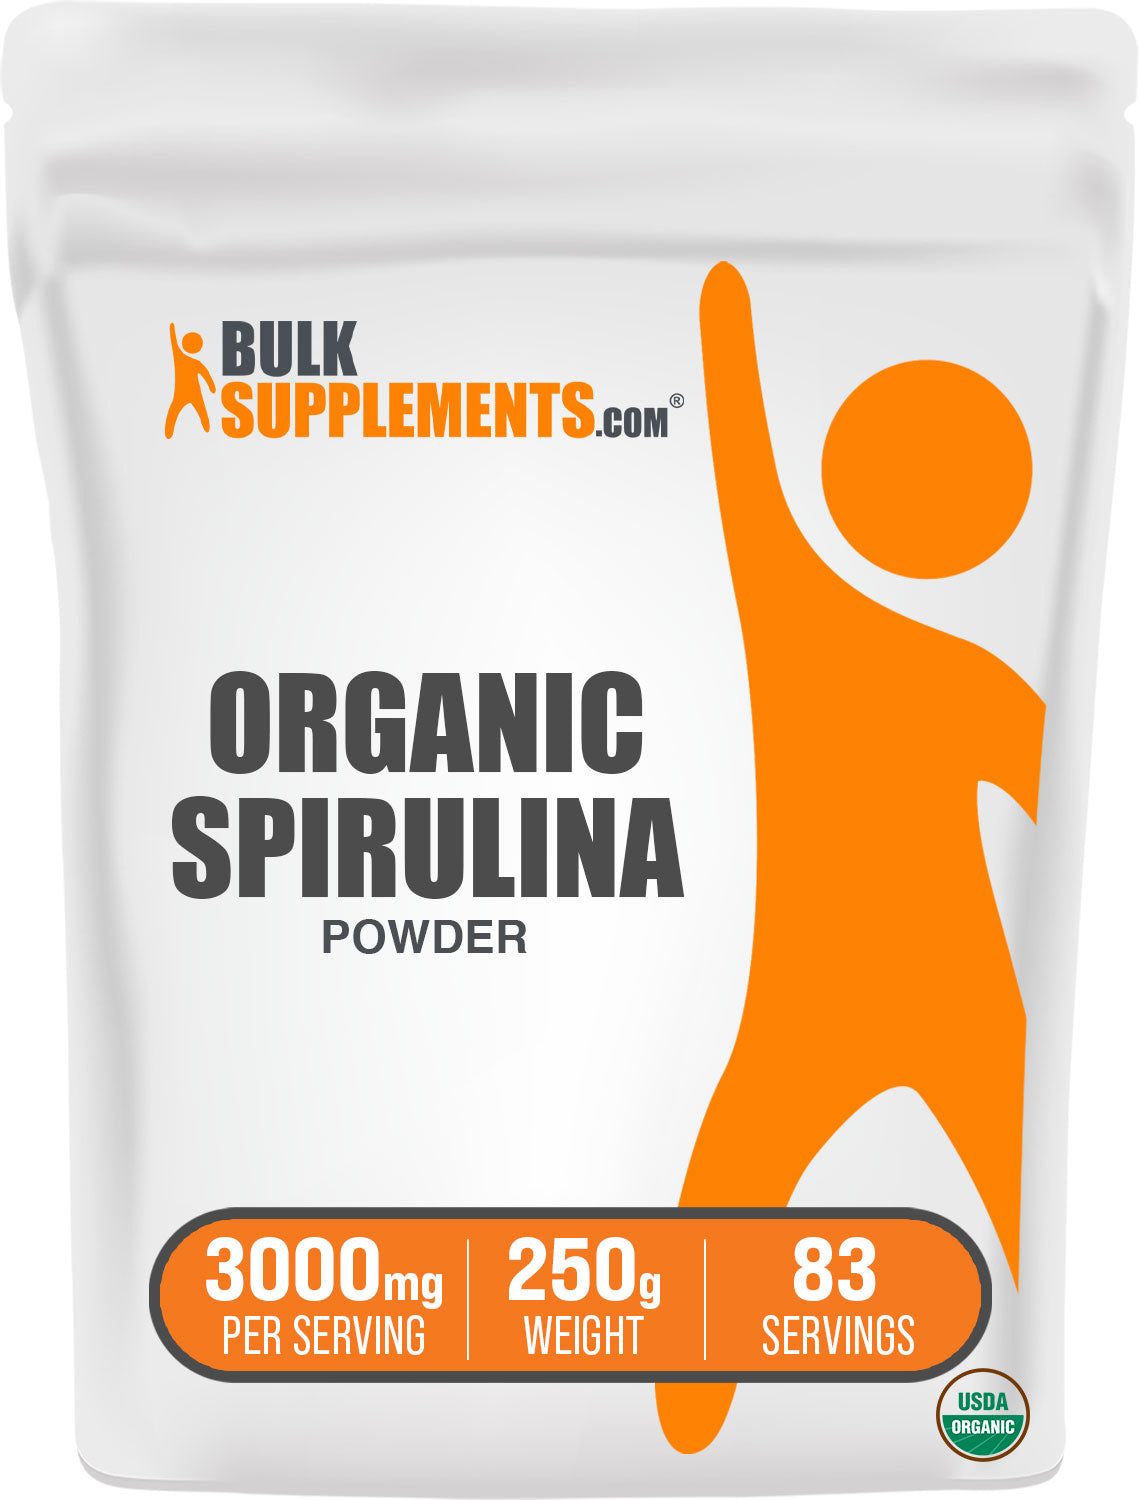  BulkSupplements.com Organic Spirulina Powder 250g Bag